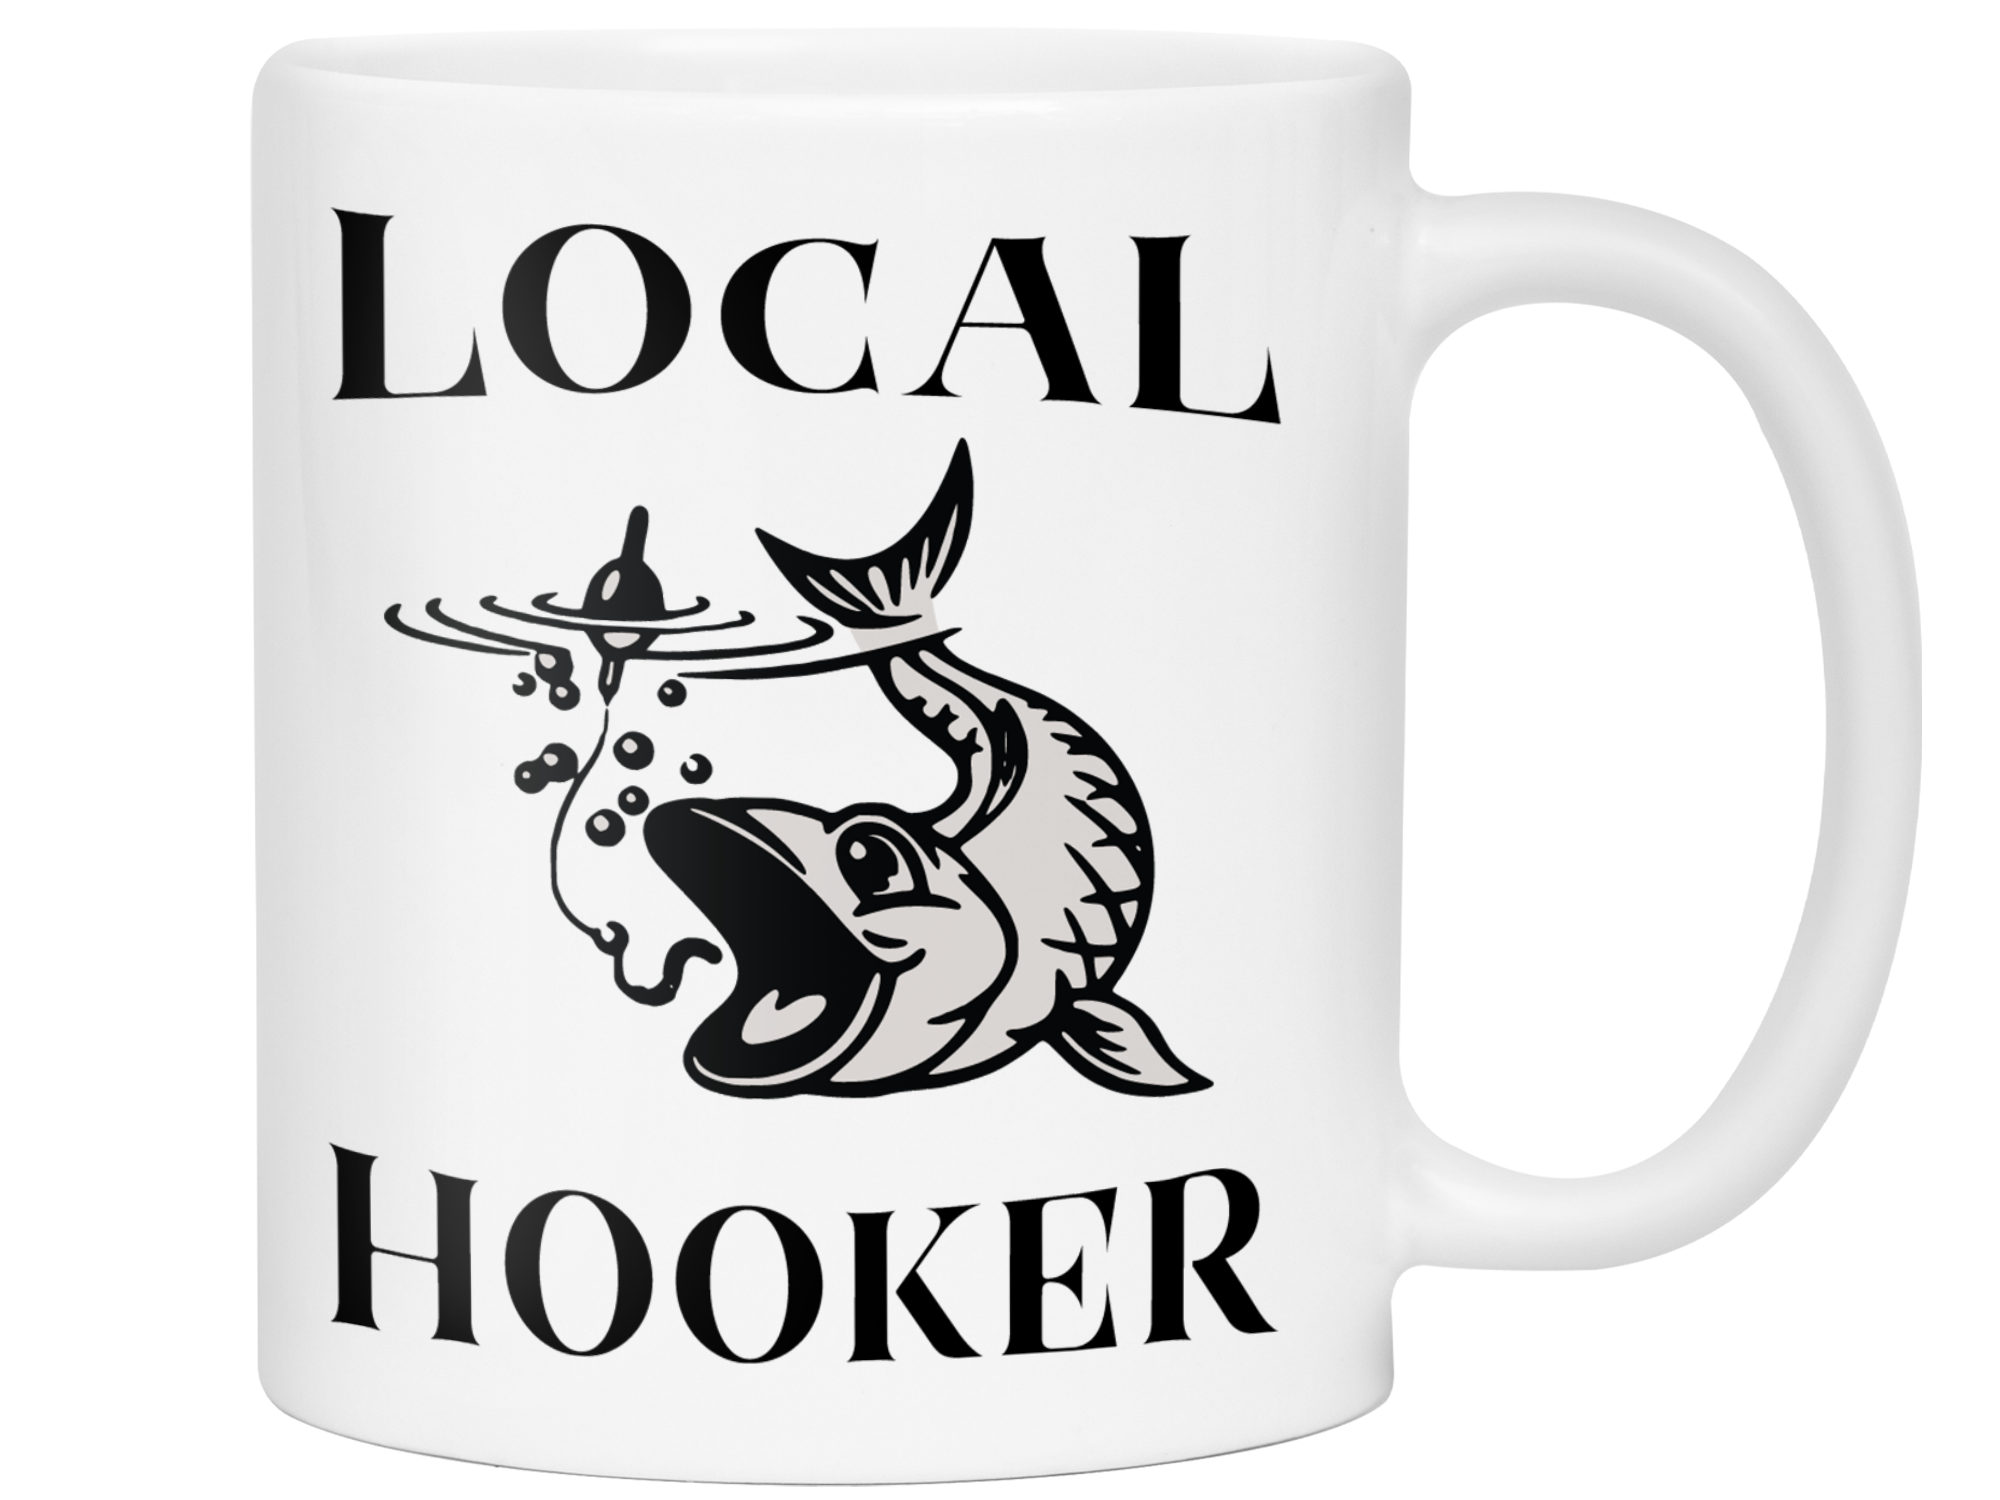 Local Hooker Funny Fishing Coffee Mug Tea Cup | Fisherman Gifts